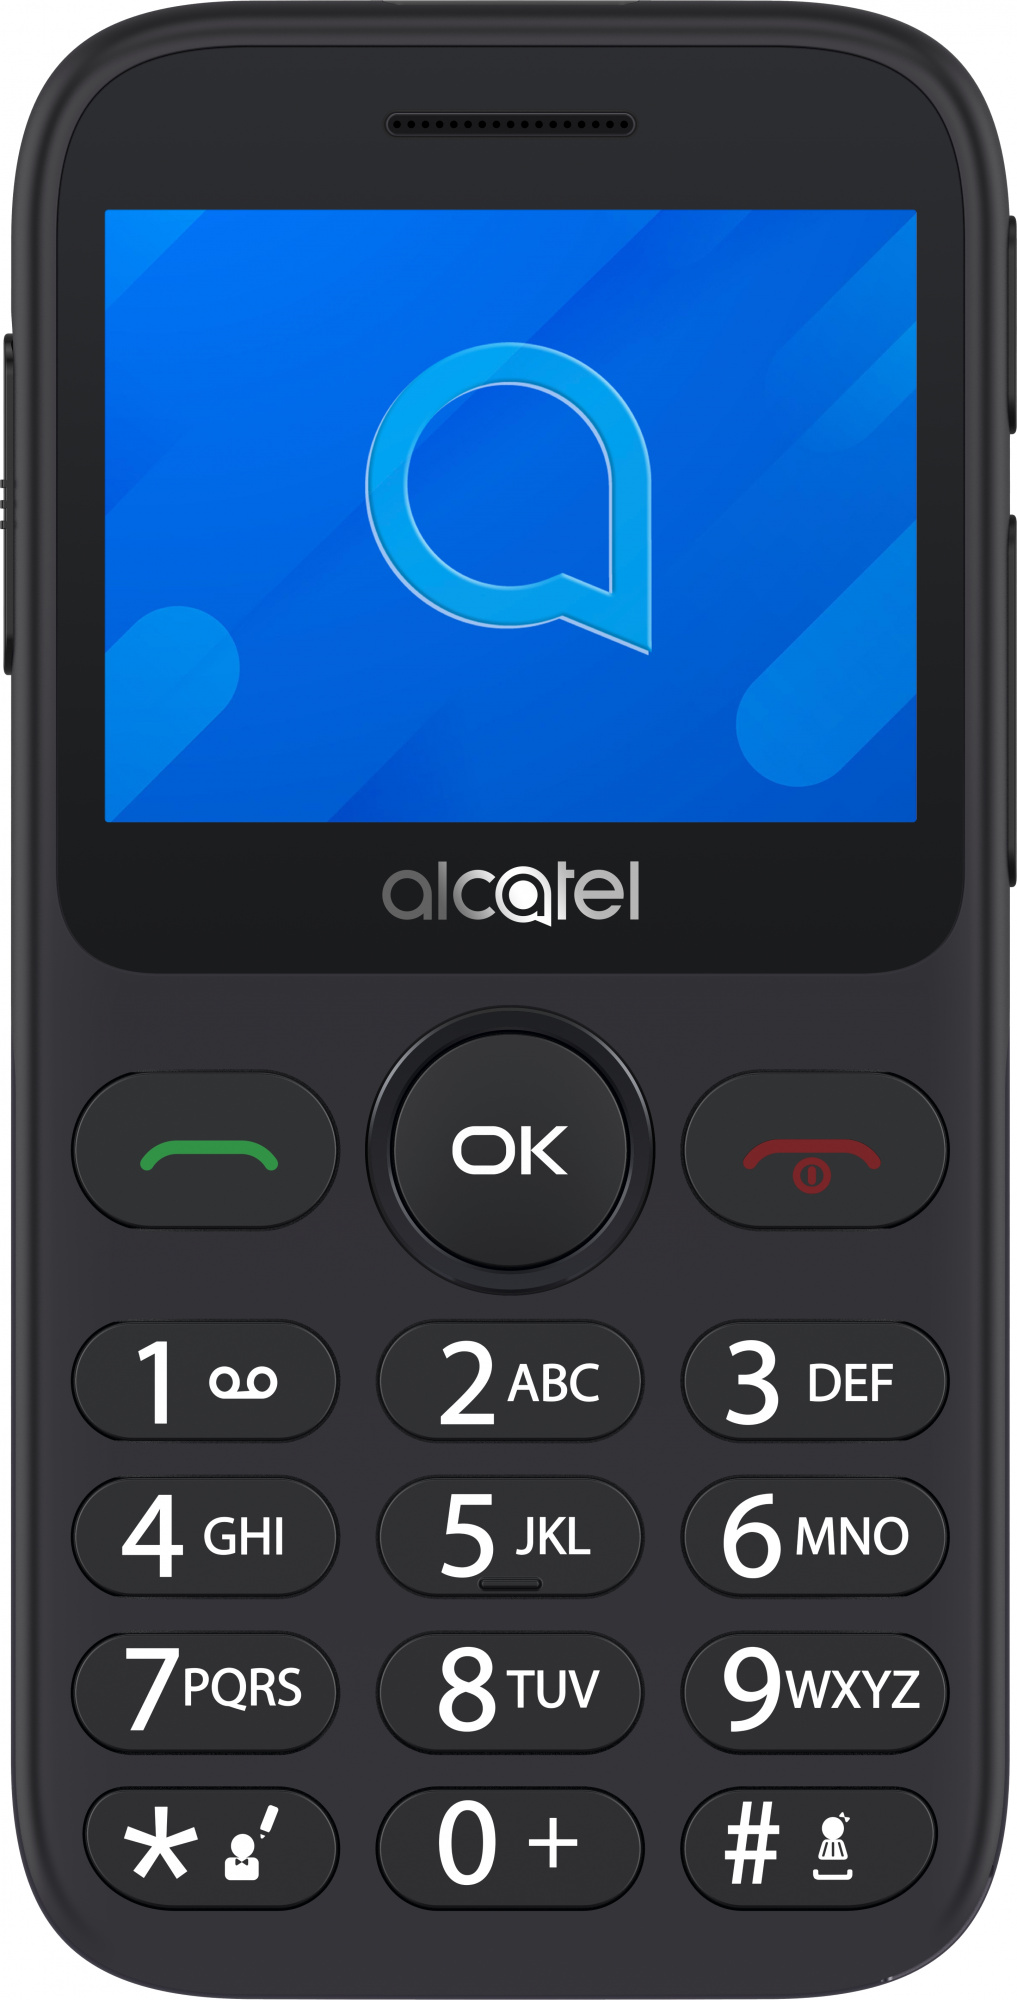 Мобильный телефон Alcatel 2020X серый моноблок 1Sim 2.4" 240x320 Thread-X 2Mpix GSM900/1800 GSM1900 FM microSD max32Gb